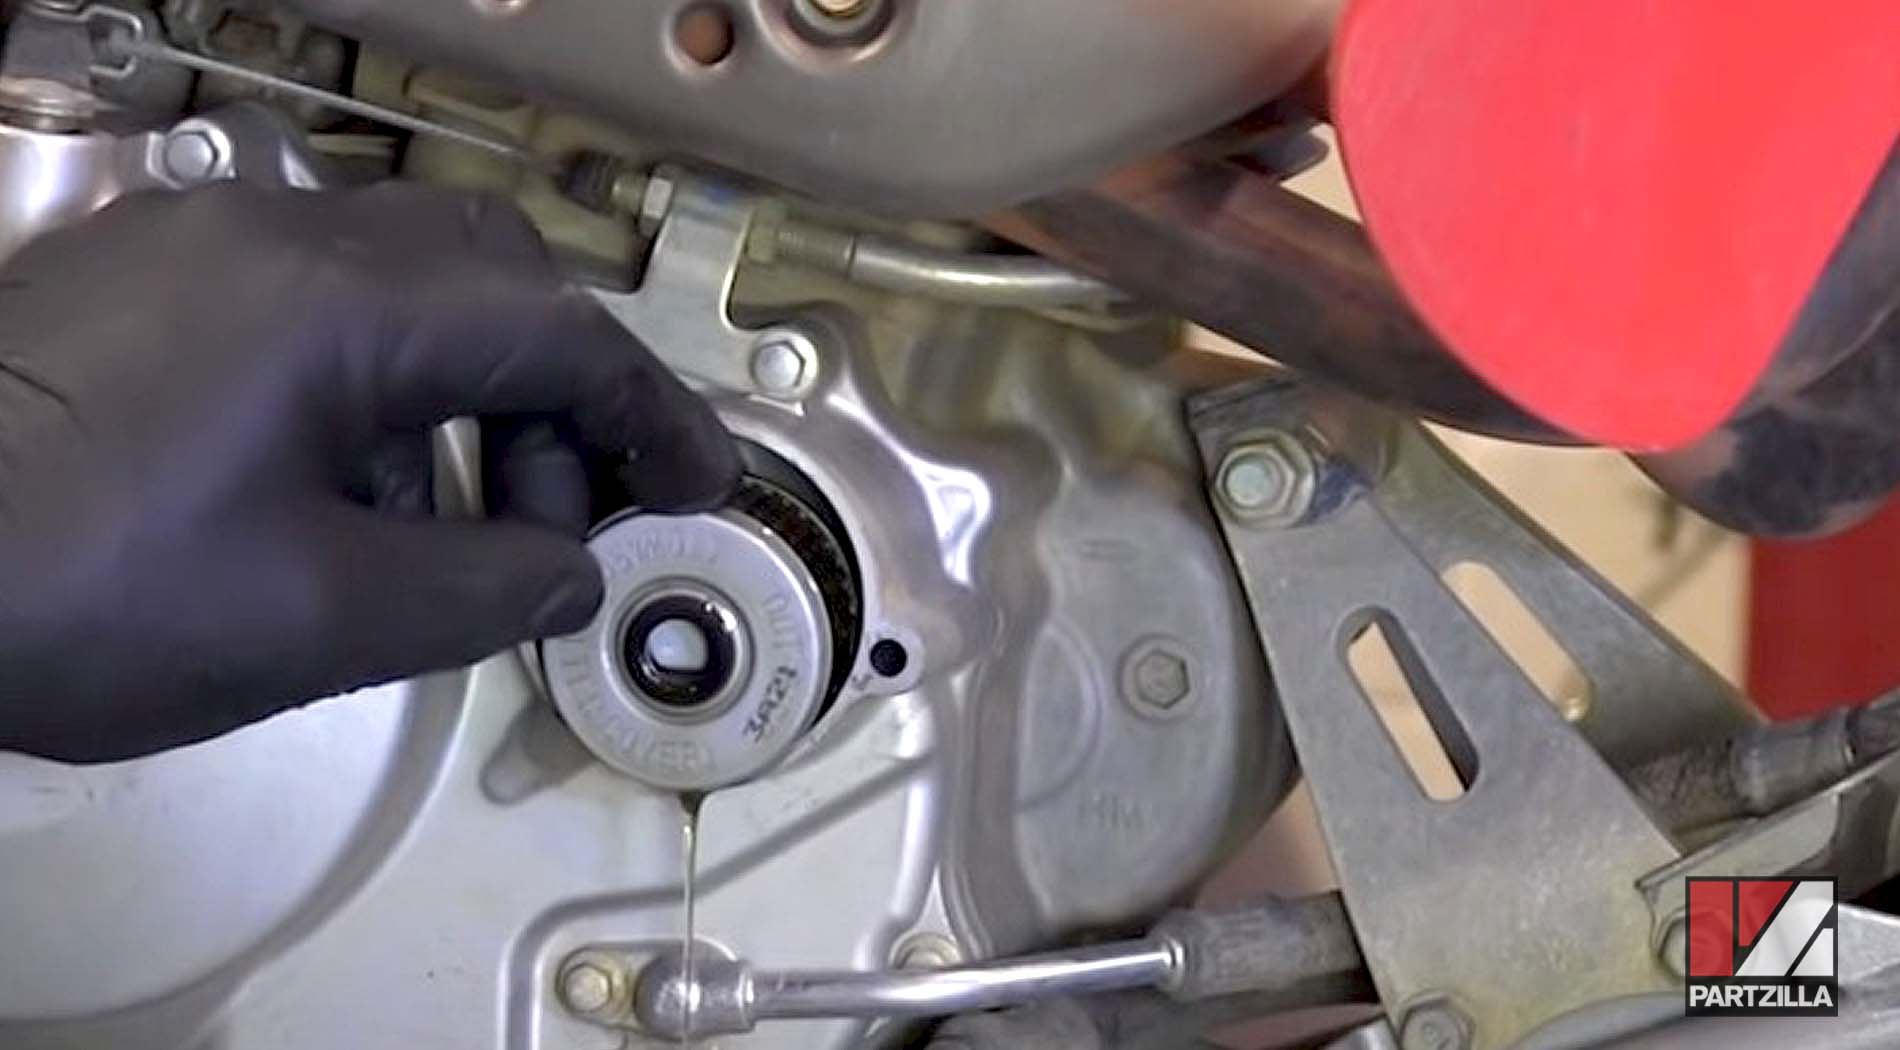 Honda TRX400 engine oil change service